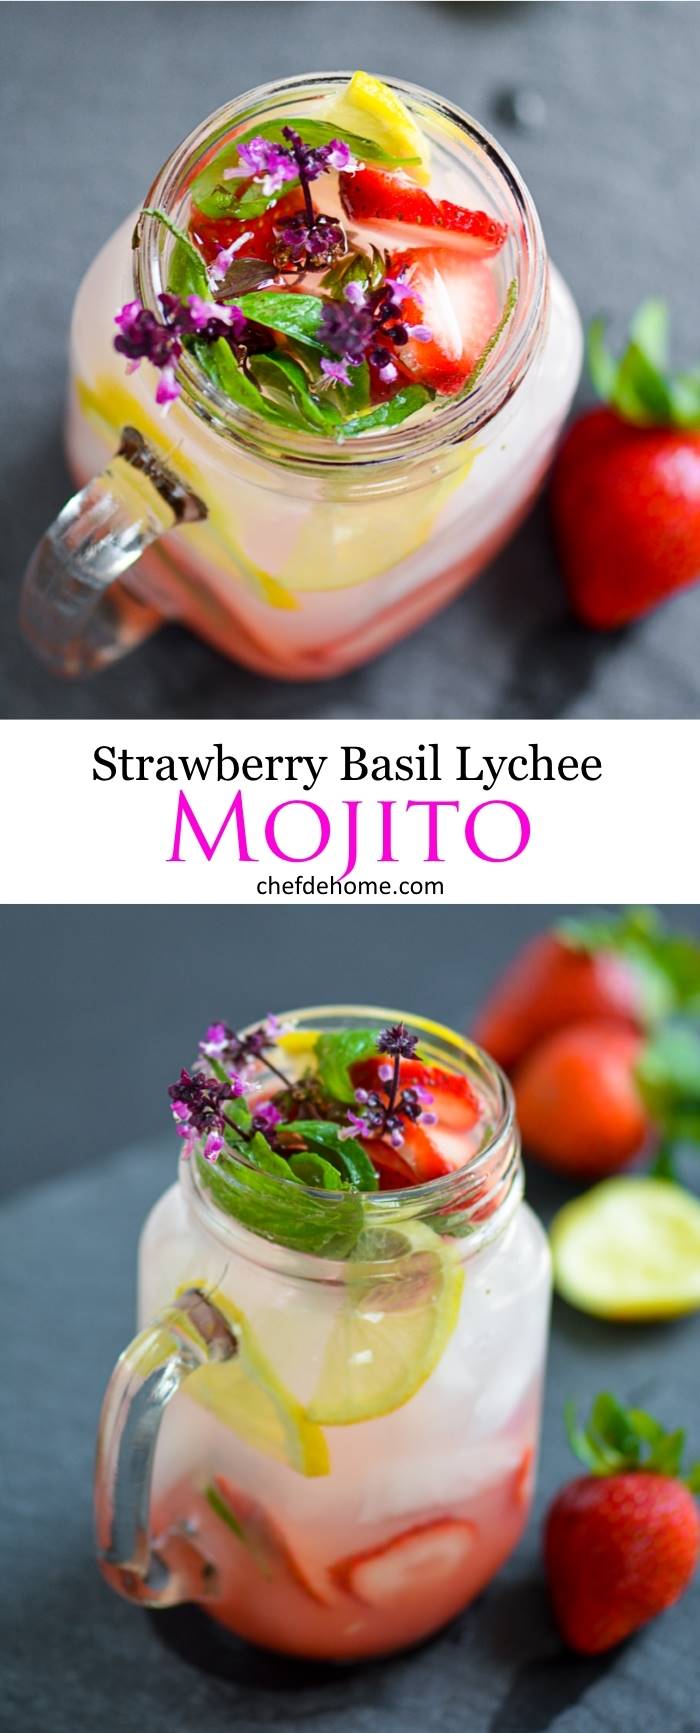 Refreshing Vegan Party Drink Strawberry Basil Lychee Mojito | chefdehome.com